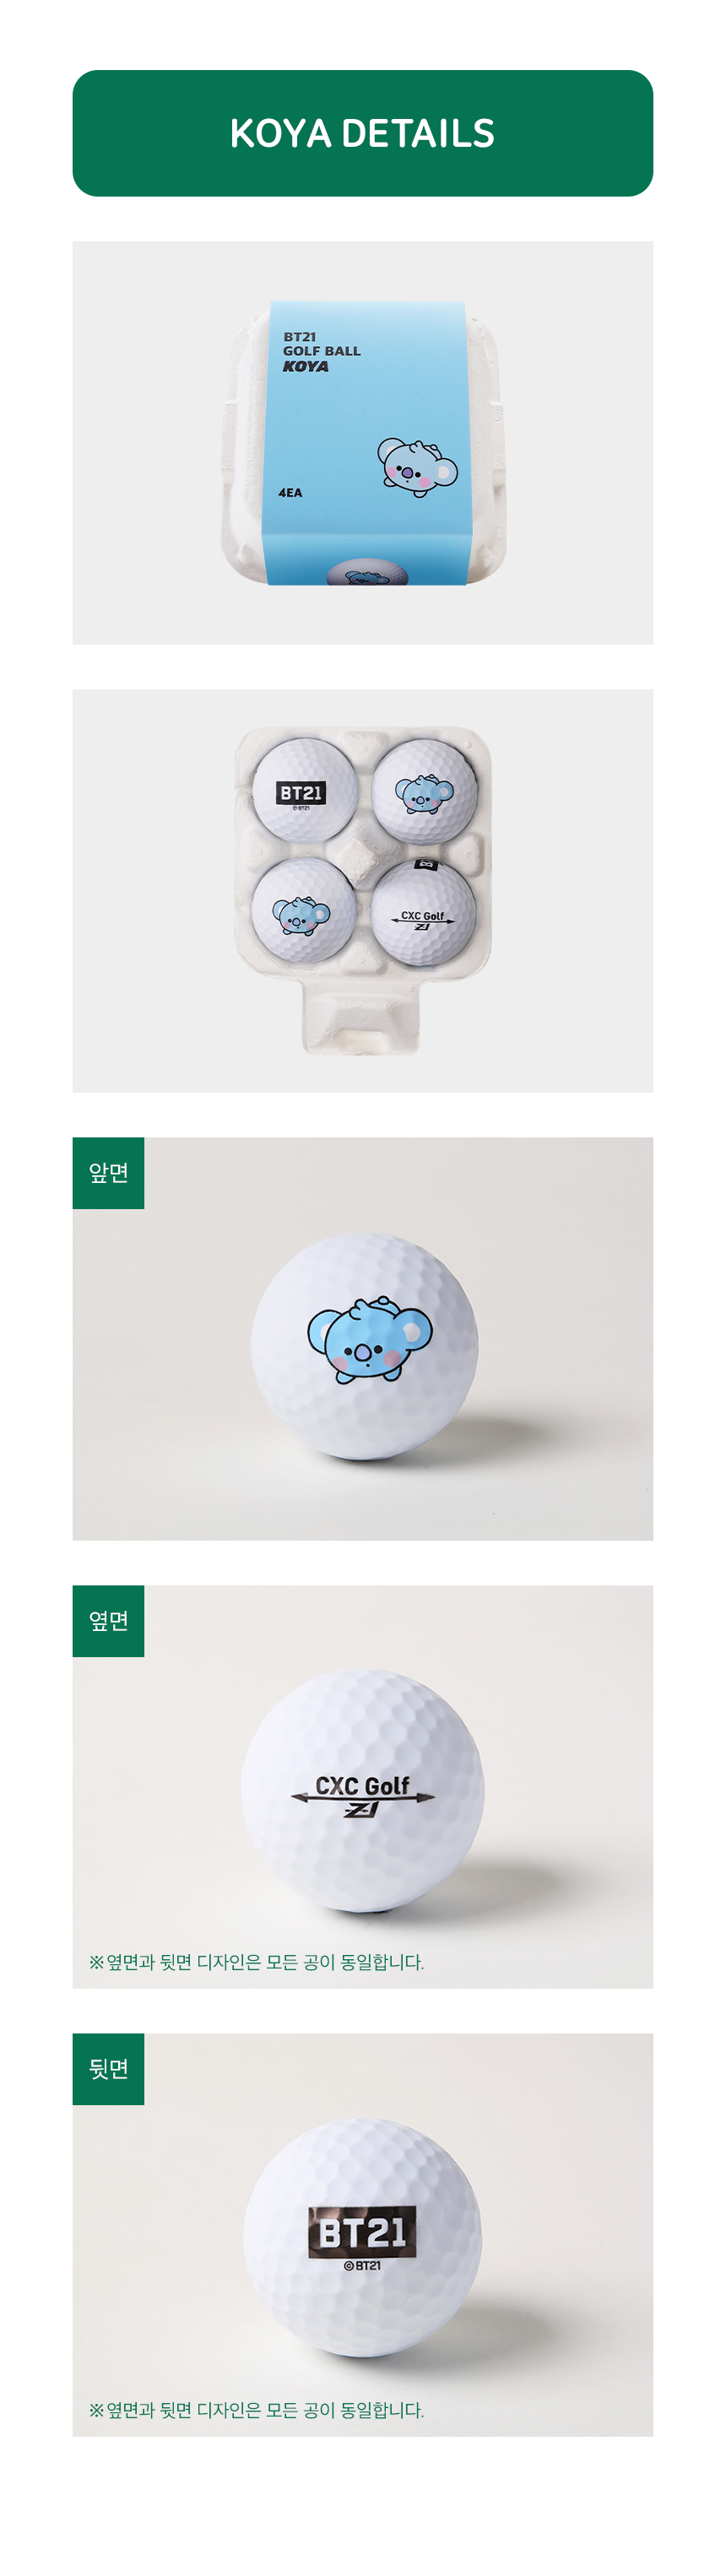 baby_golf_ball_4ea_detail_koya.jpg